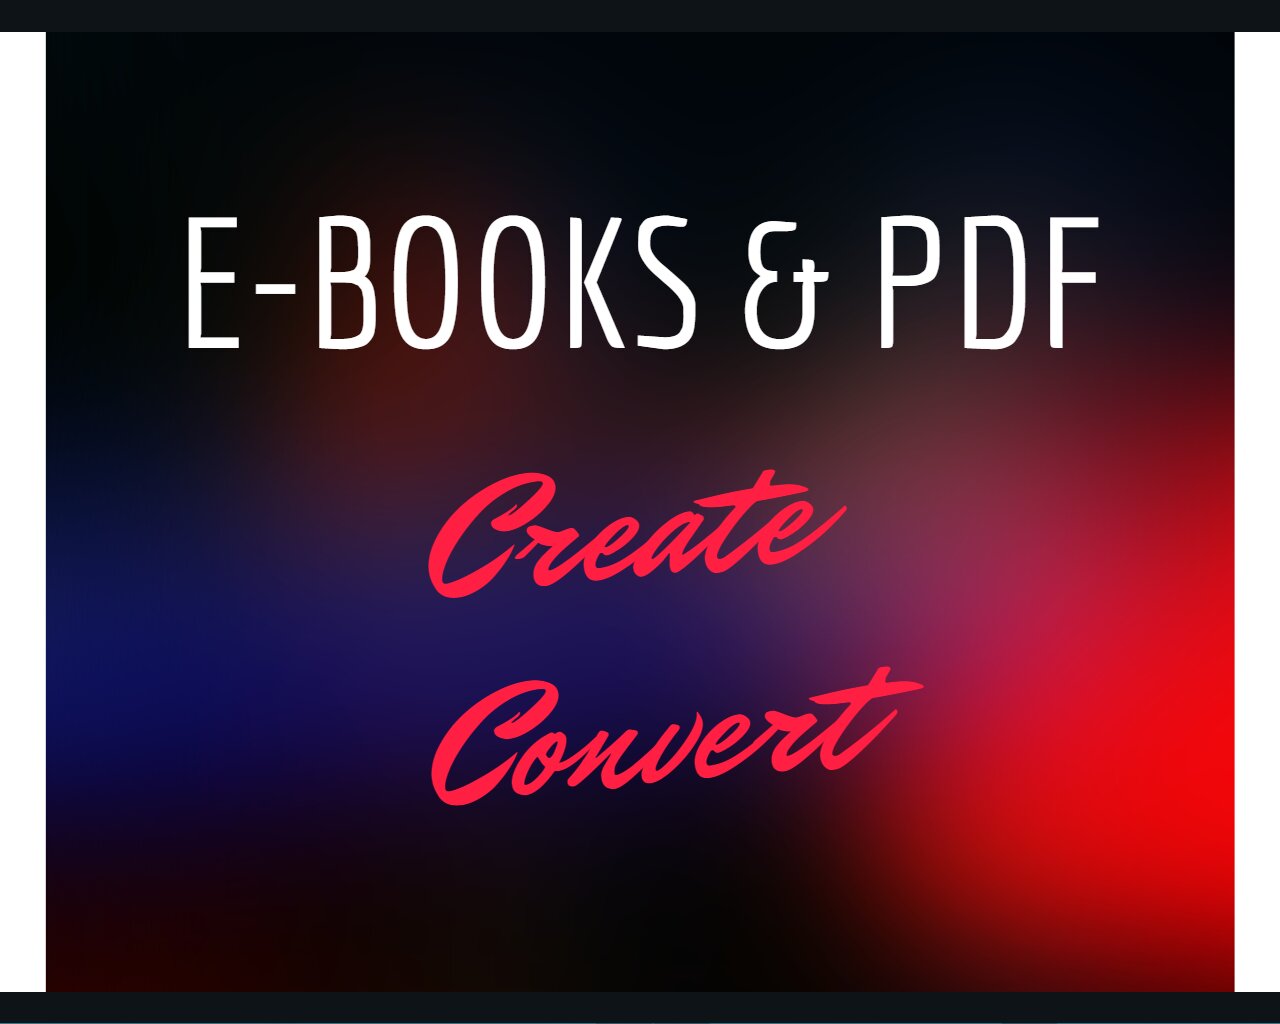 I will create or convert Ebooks and PDF files